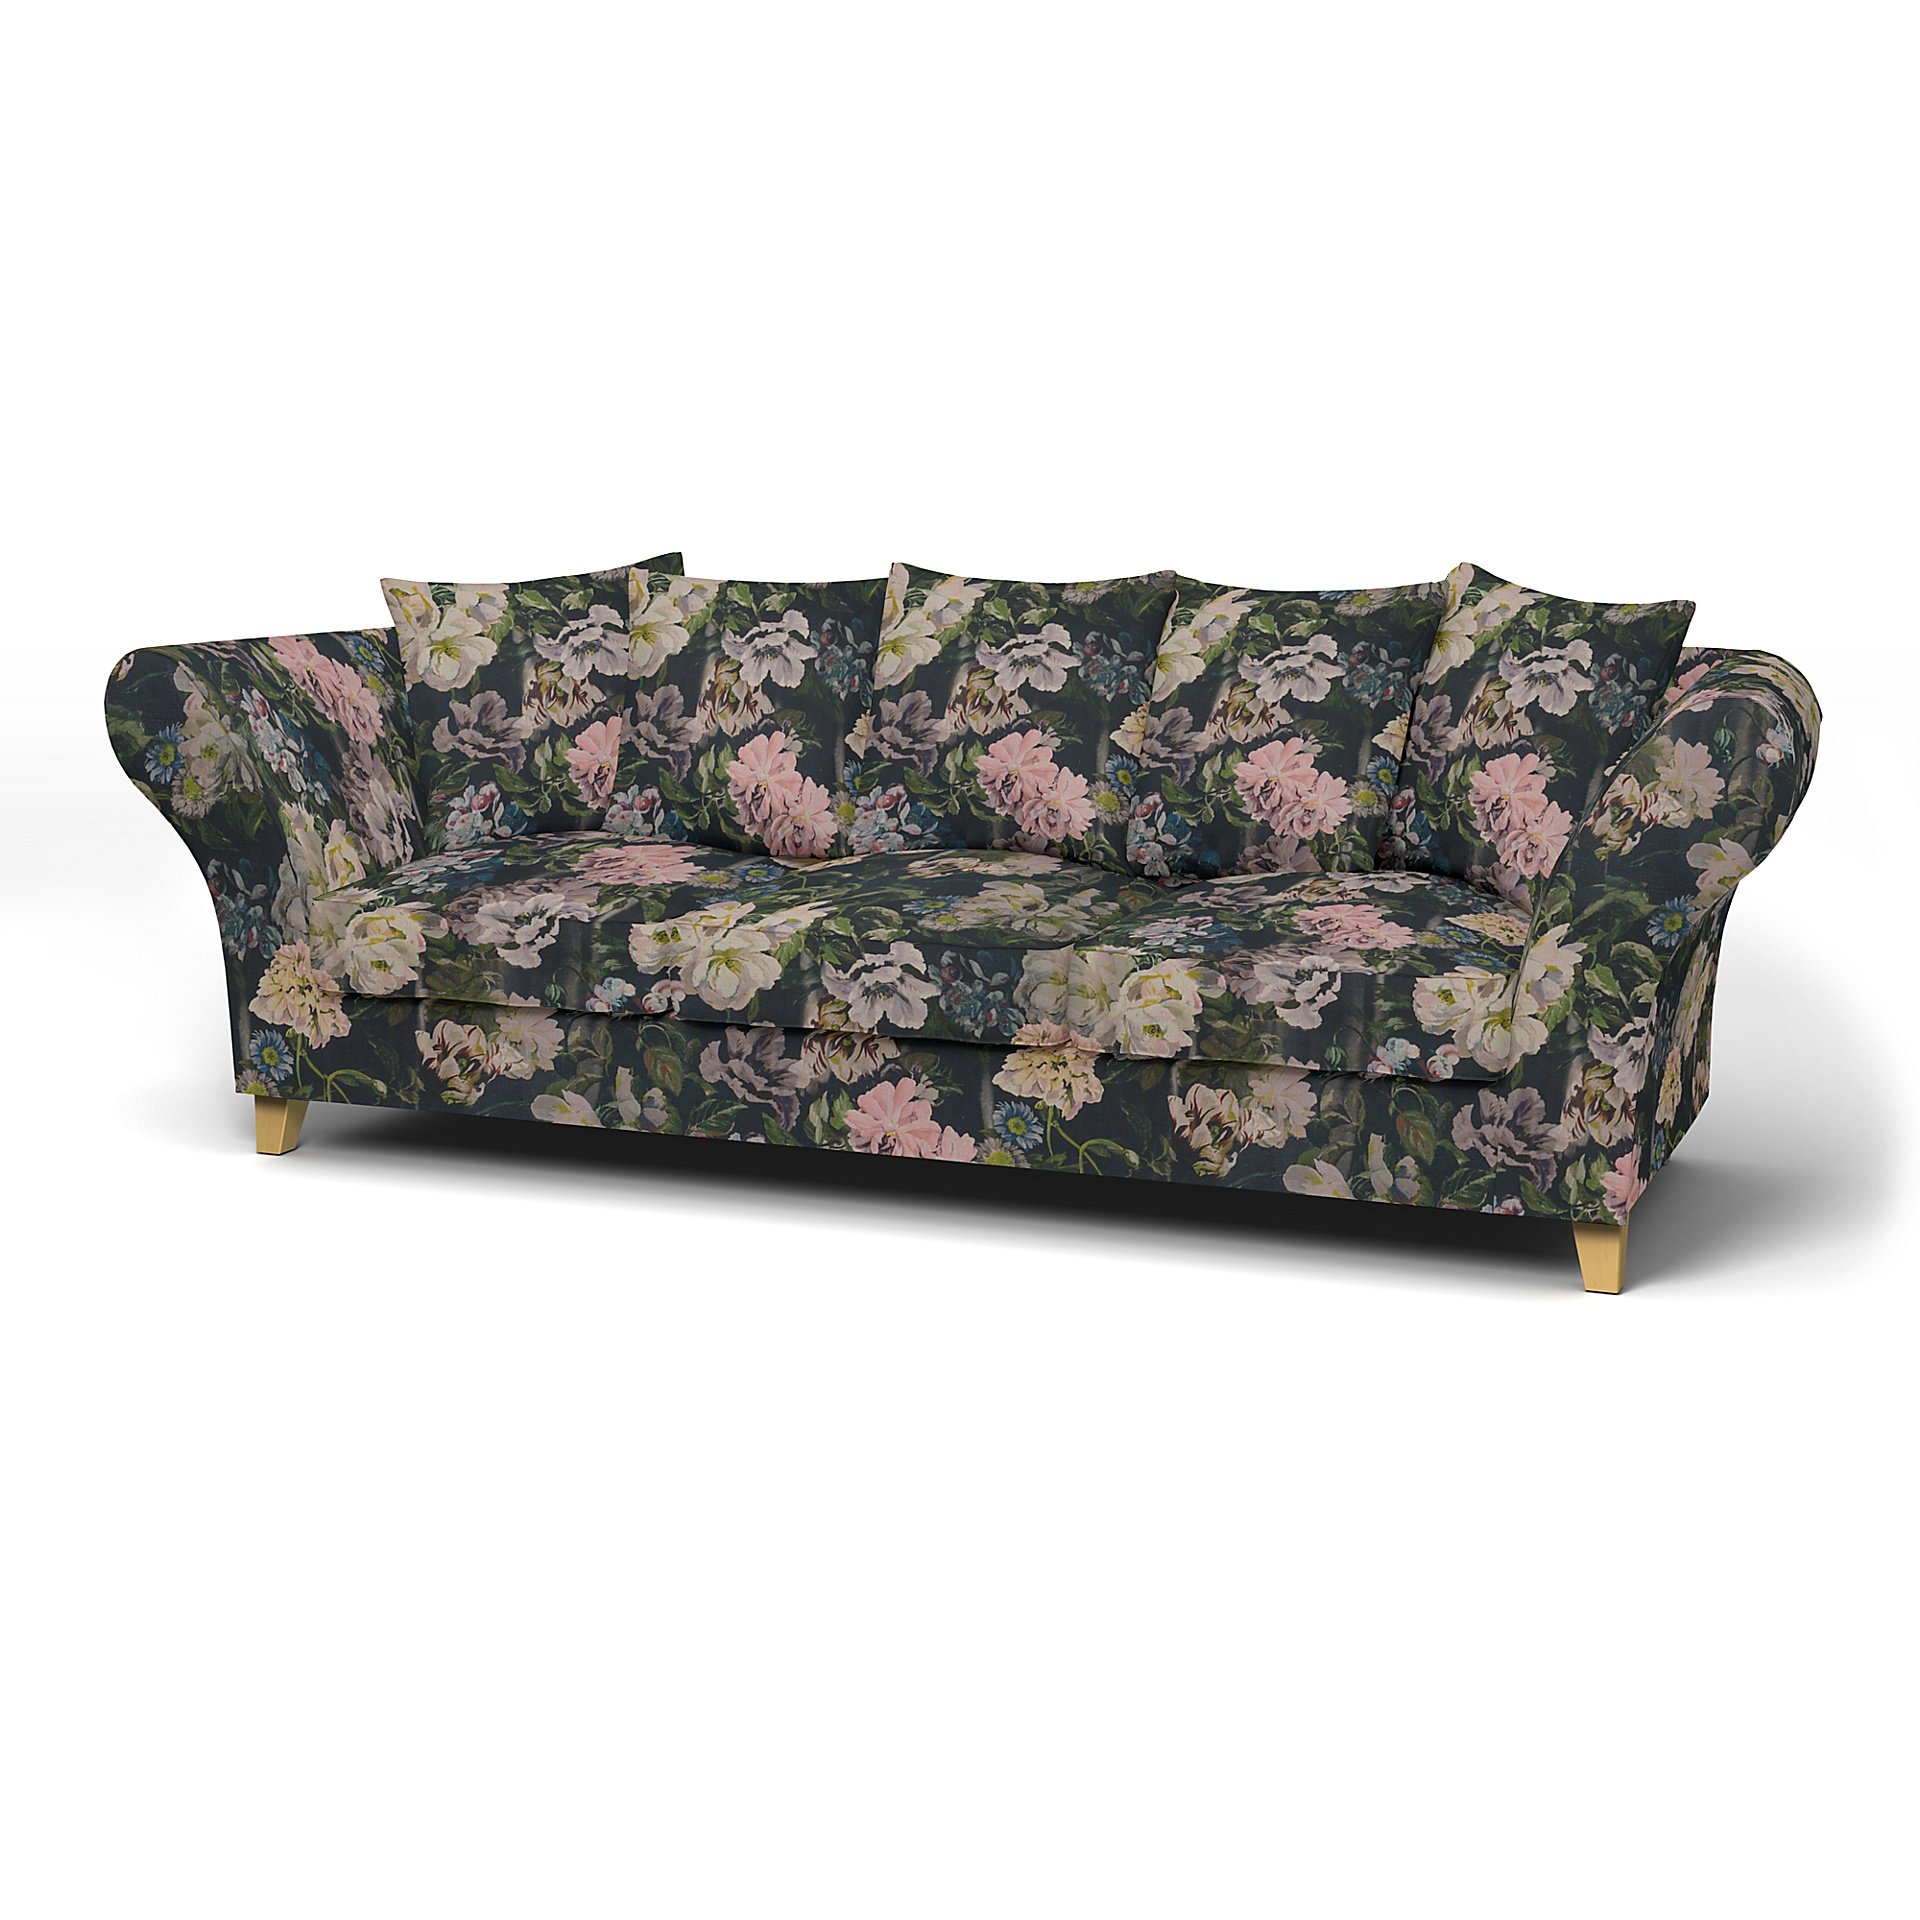 IKEA - Backa 3.5 Seater Sofa Cover, Delft Flower - Graphite, Linen - Bemz